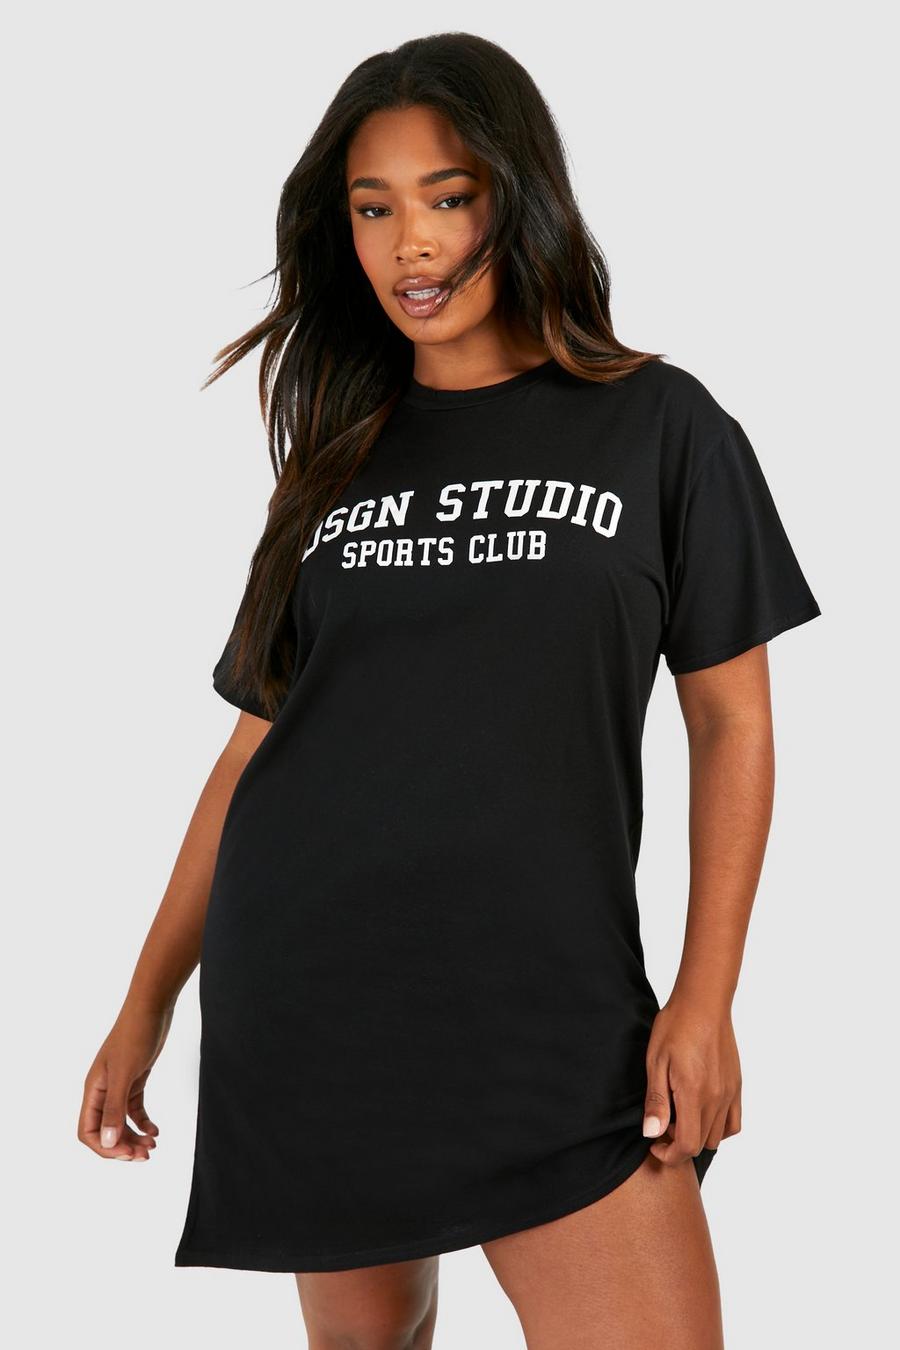 Grande taille - Robe t-shirt à slogan Dsgn Studio, Black image number 1